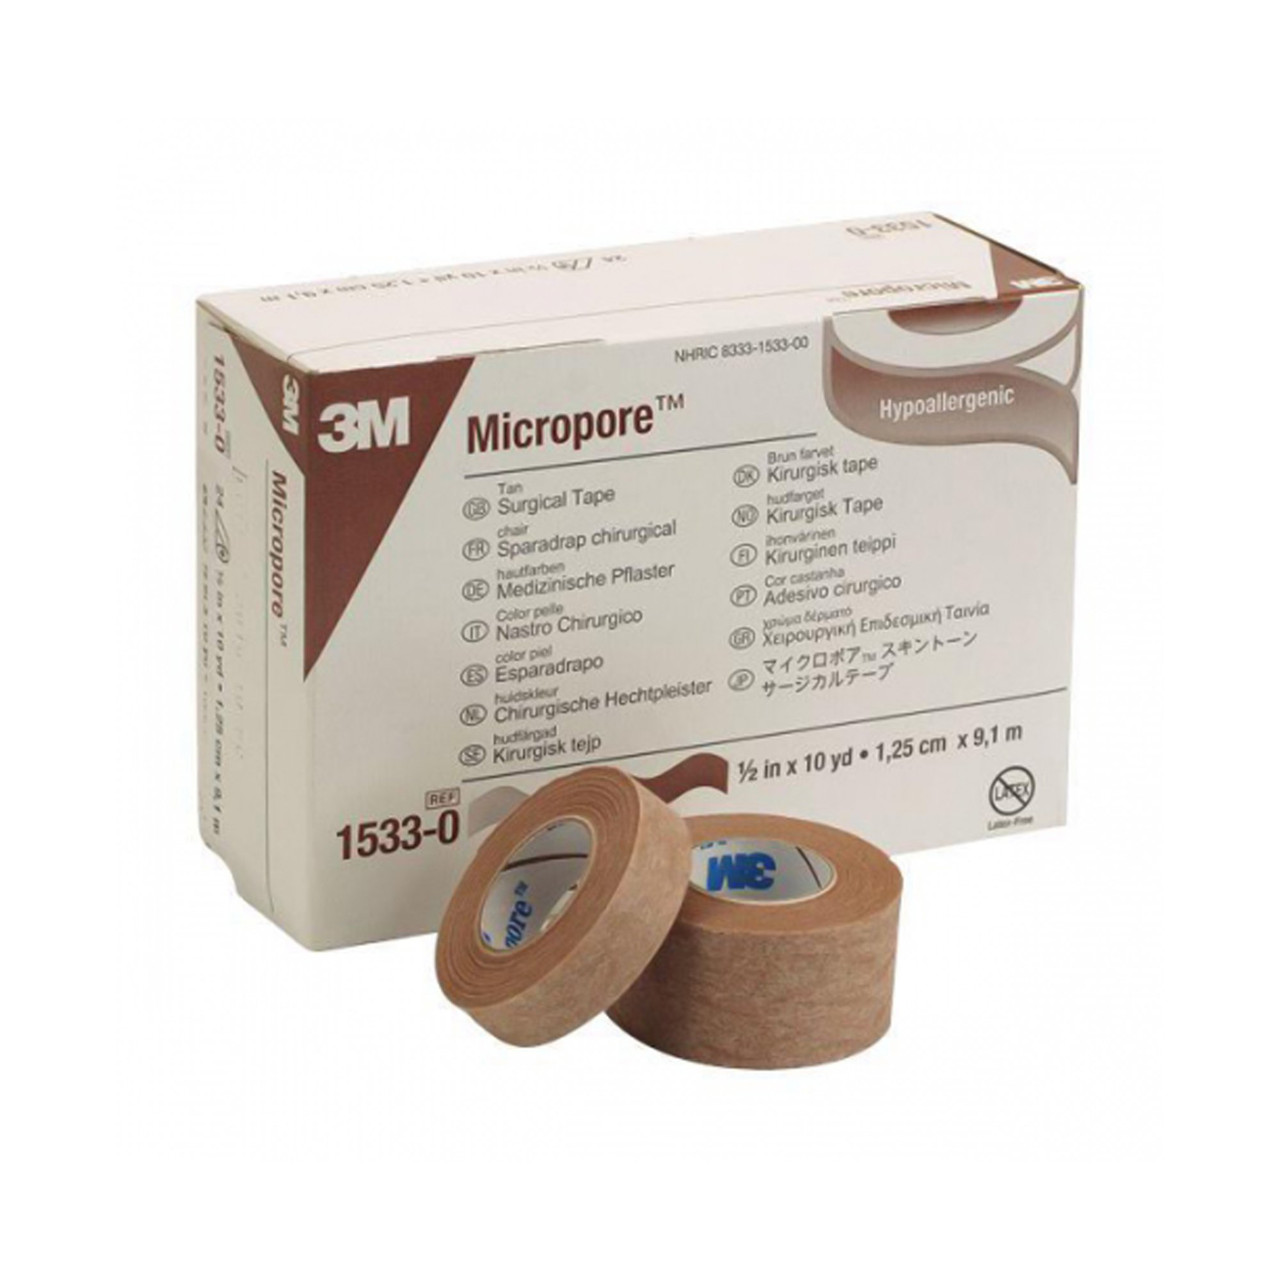 3M™ Micropore™ Paper Medical Tape, 1/2 Inch x 10 Yard, Tan #1533-0